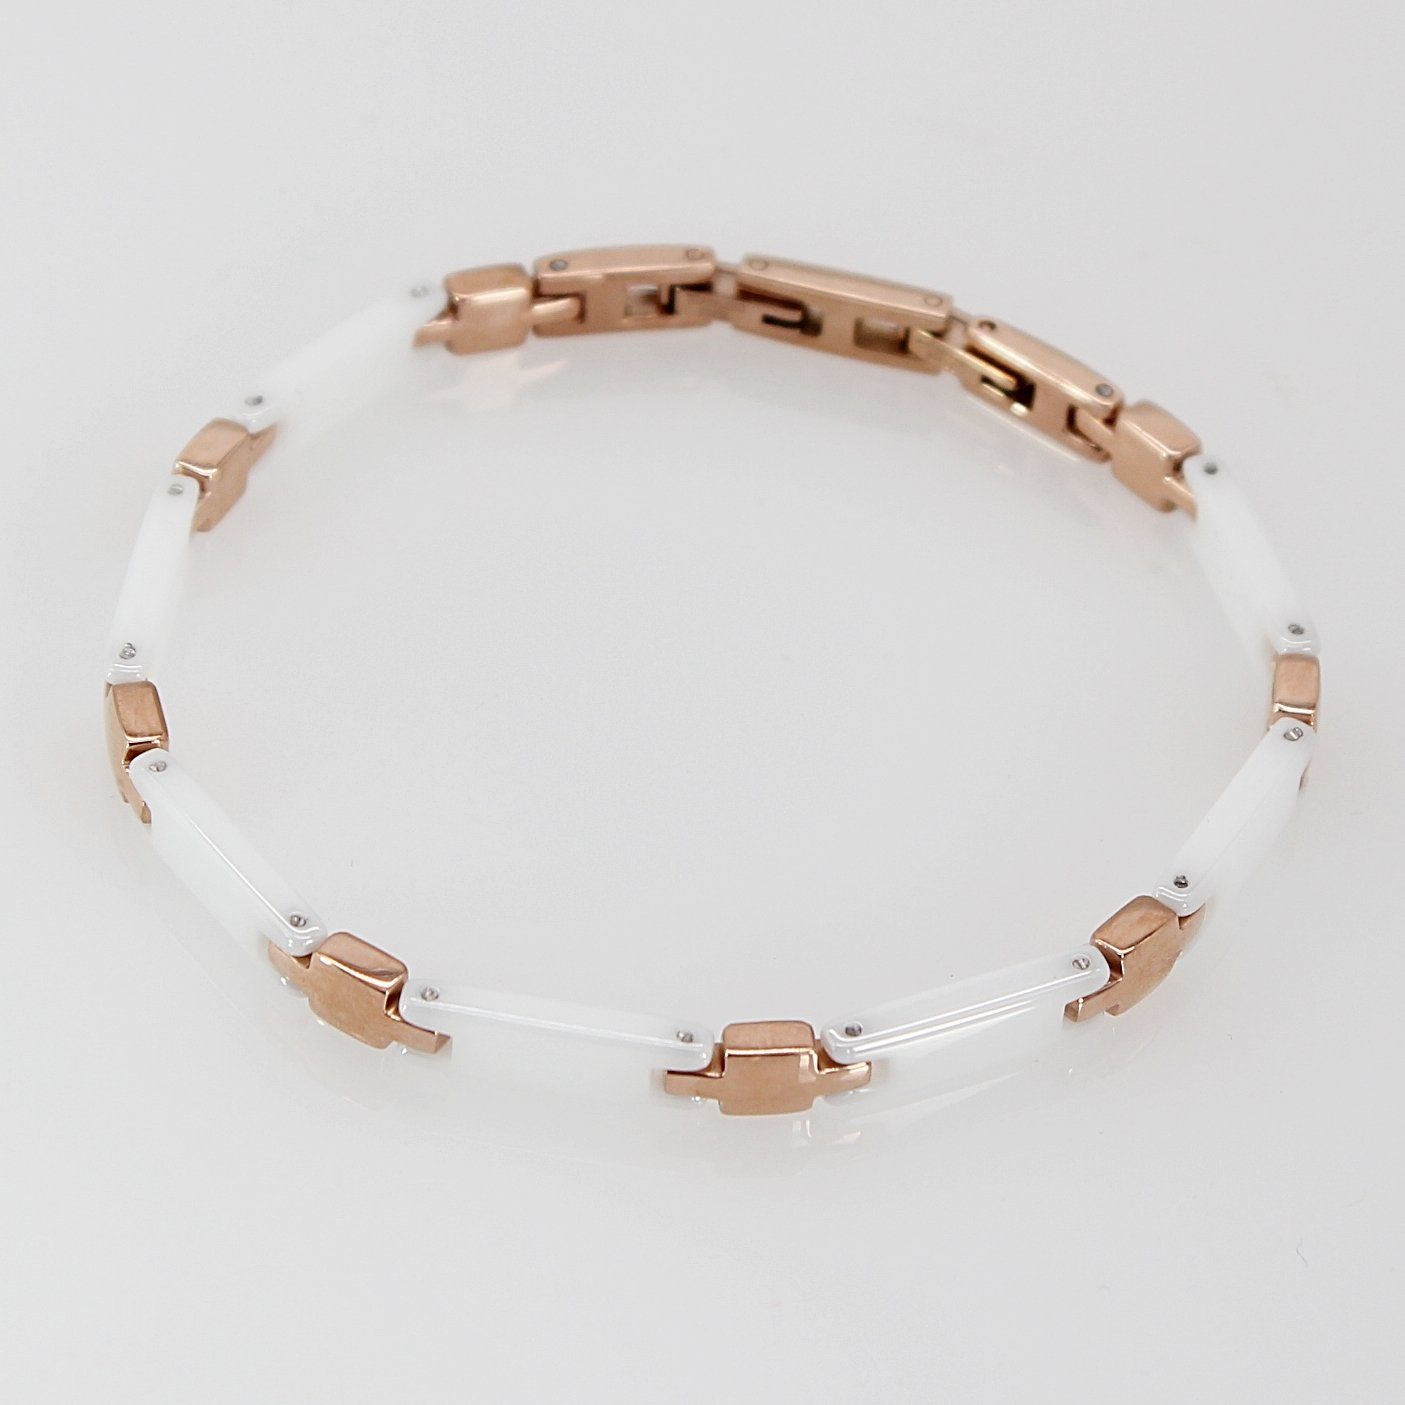 ELLAWIL Armband Edelstahlarmband Gliederarmband aus Keramik und Edelstahl Weiß, Gold (Armbandlänge 19 cm), inklusive Geschenkschachtel | Edelstahlarmbänder